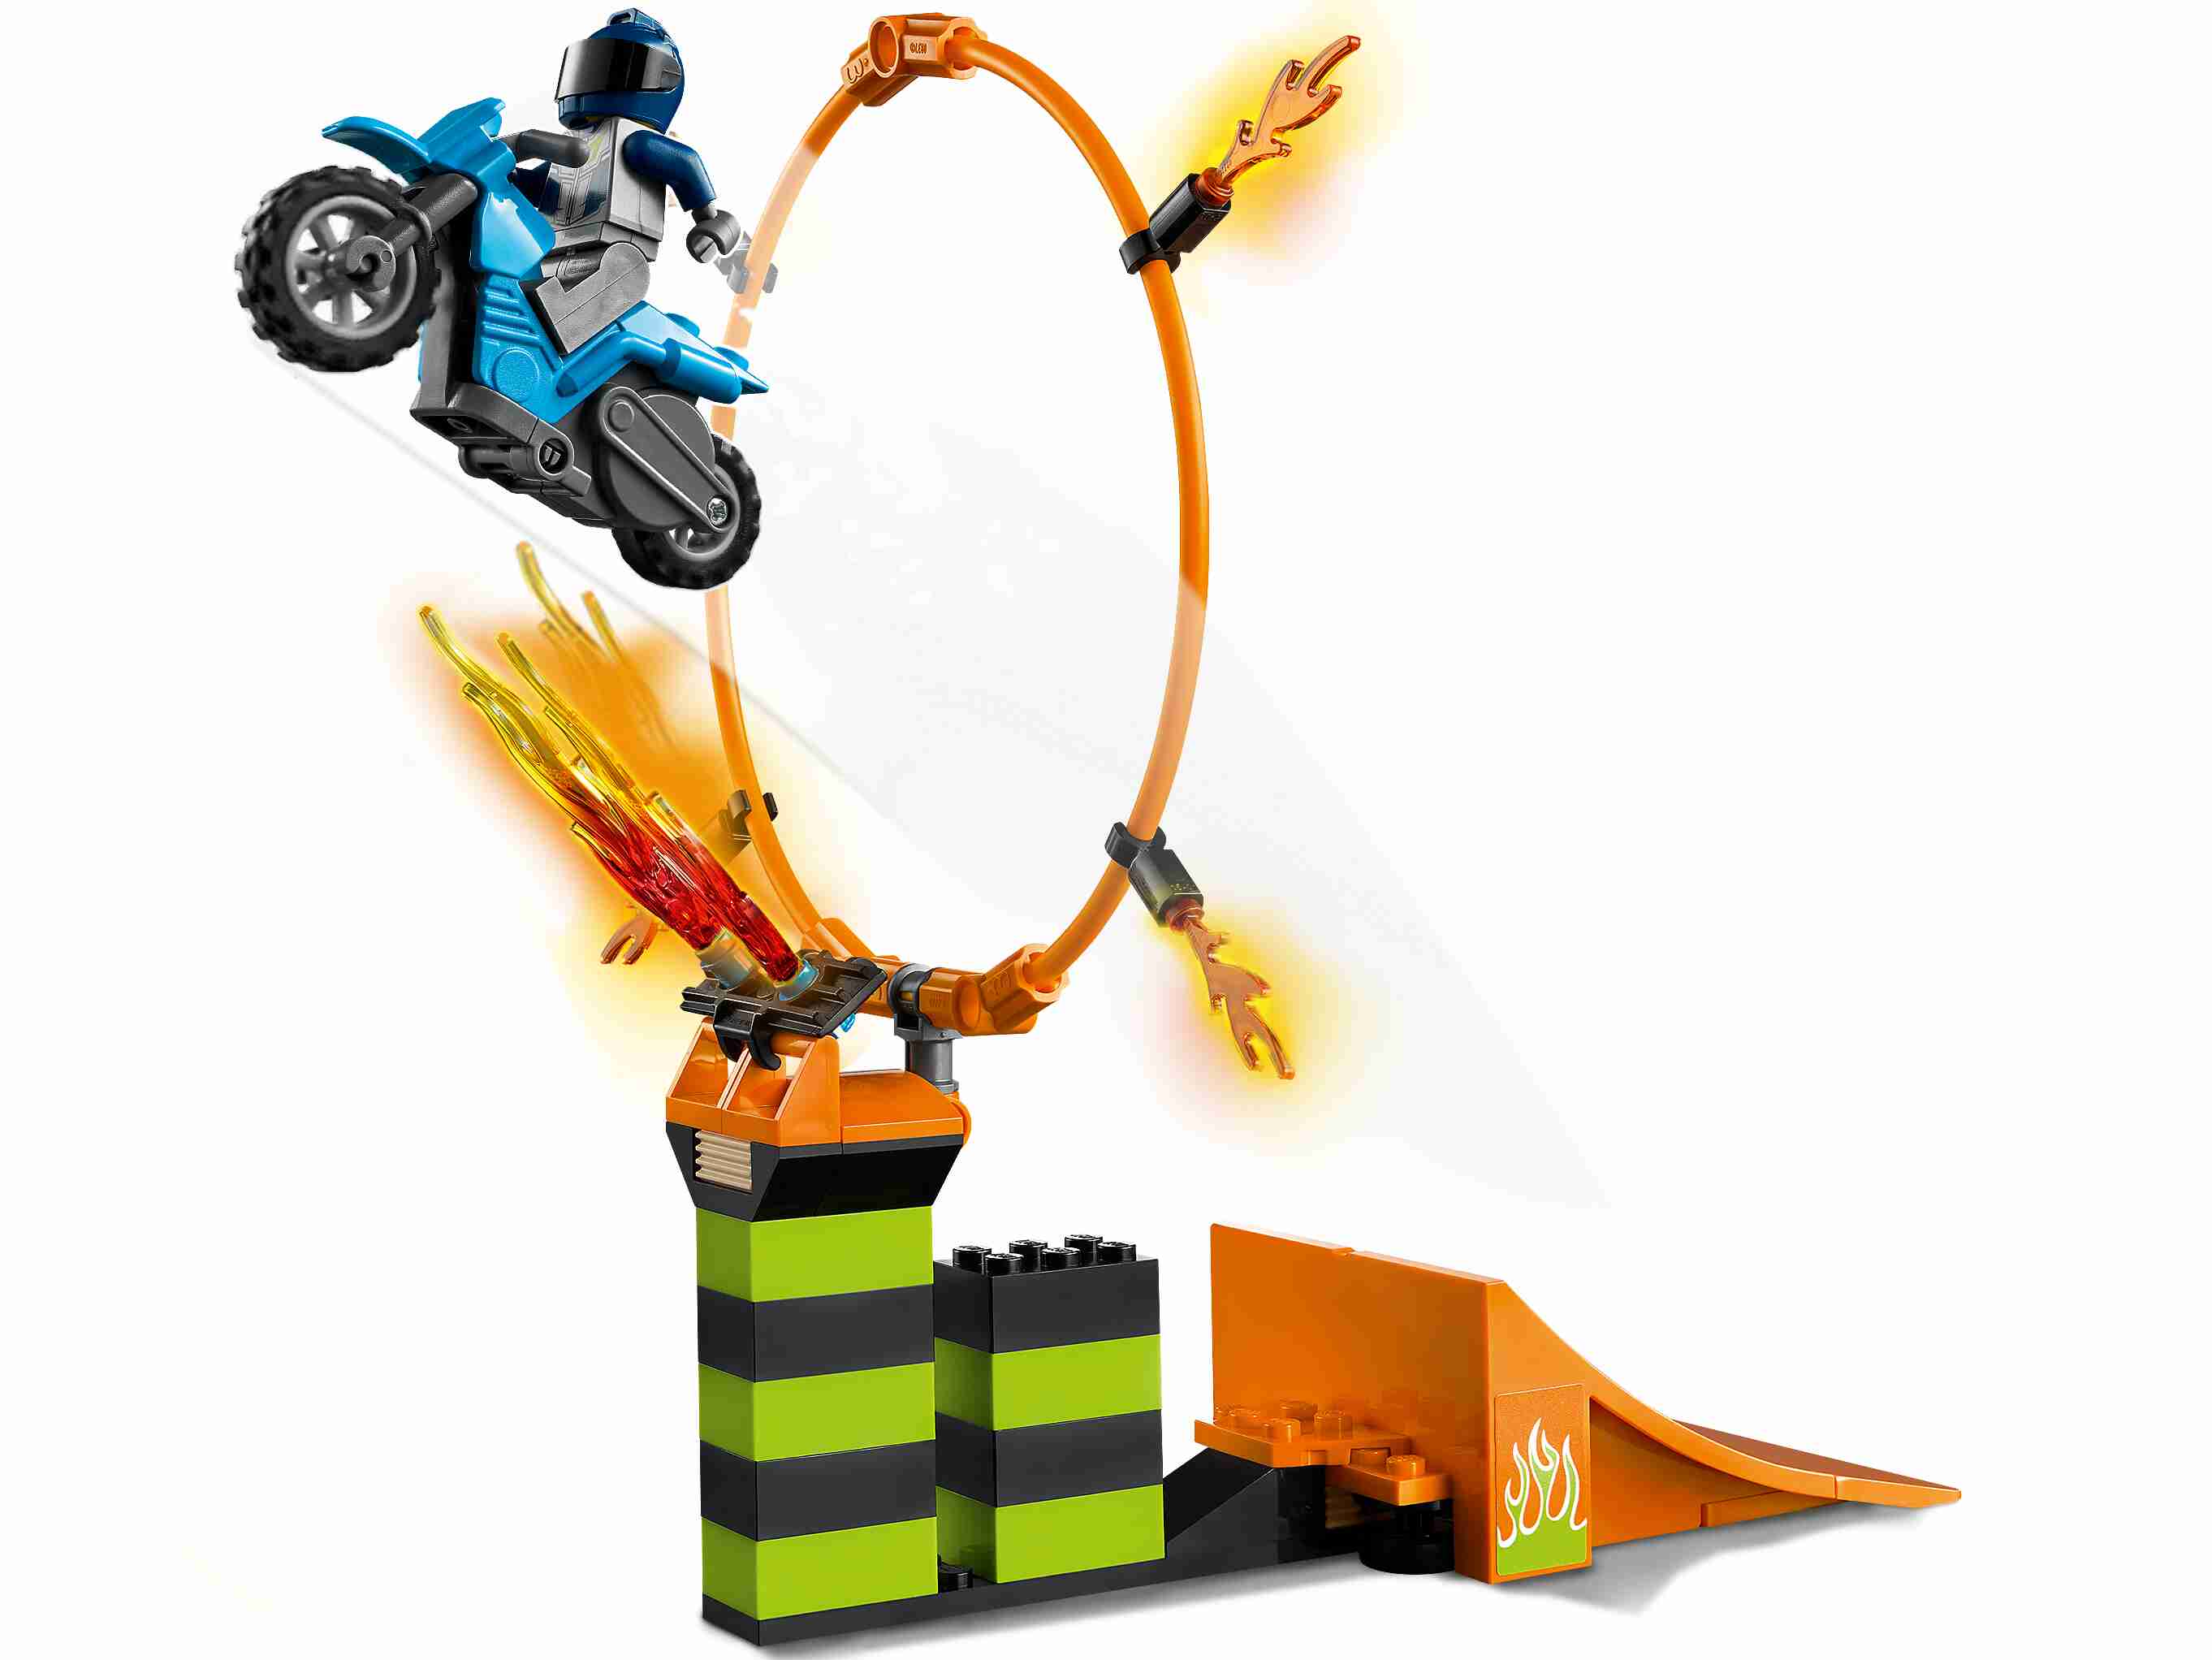 LEGO 60299 City Stuntz Stunt-Wettbewerb, Set mit Duke-DeTain-Minifigur